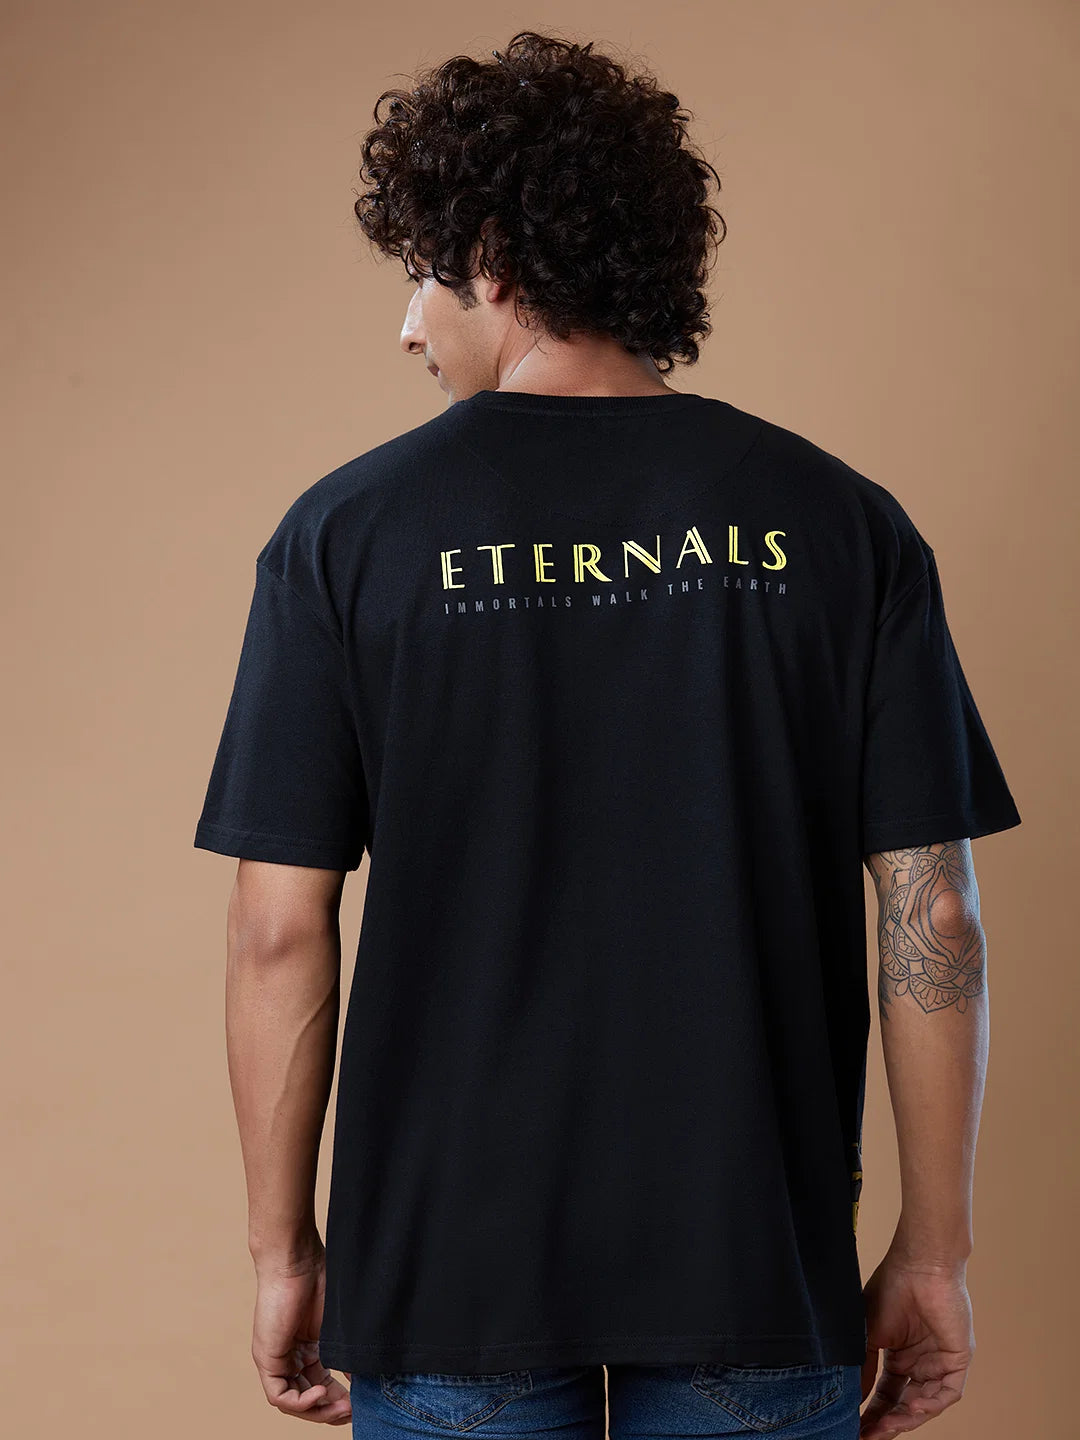 Eternals The Team (UK version)